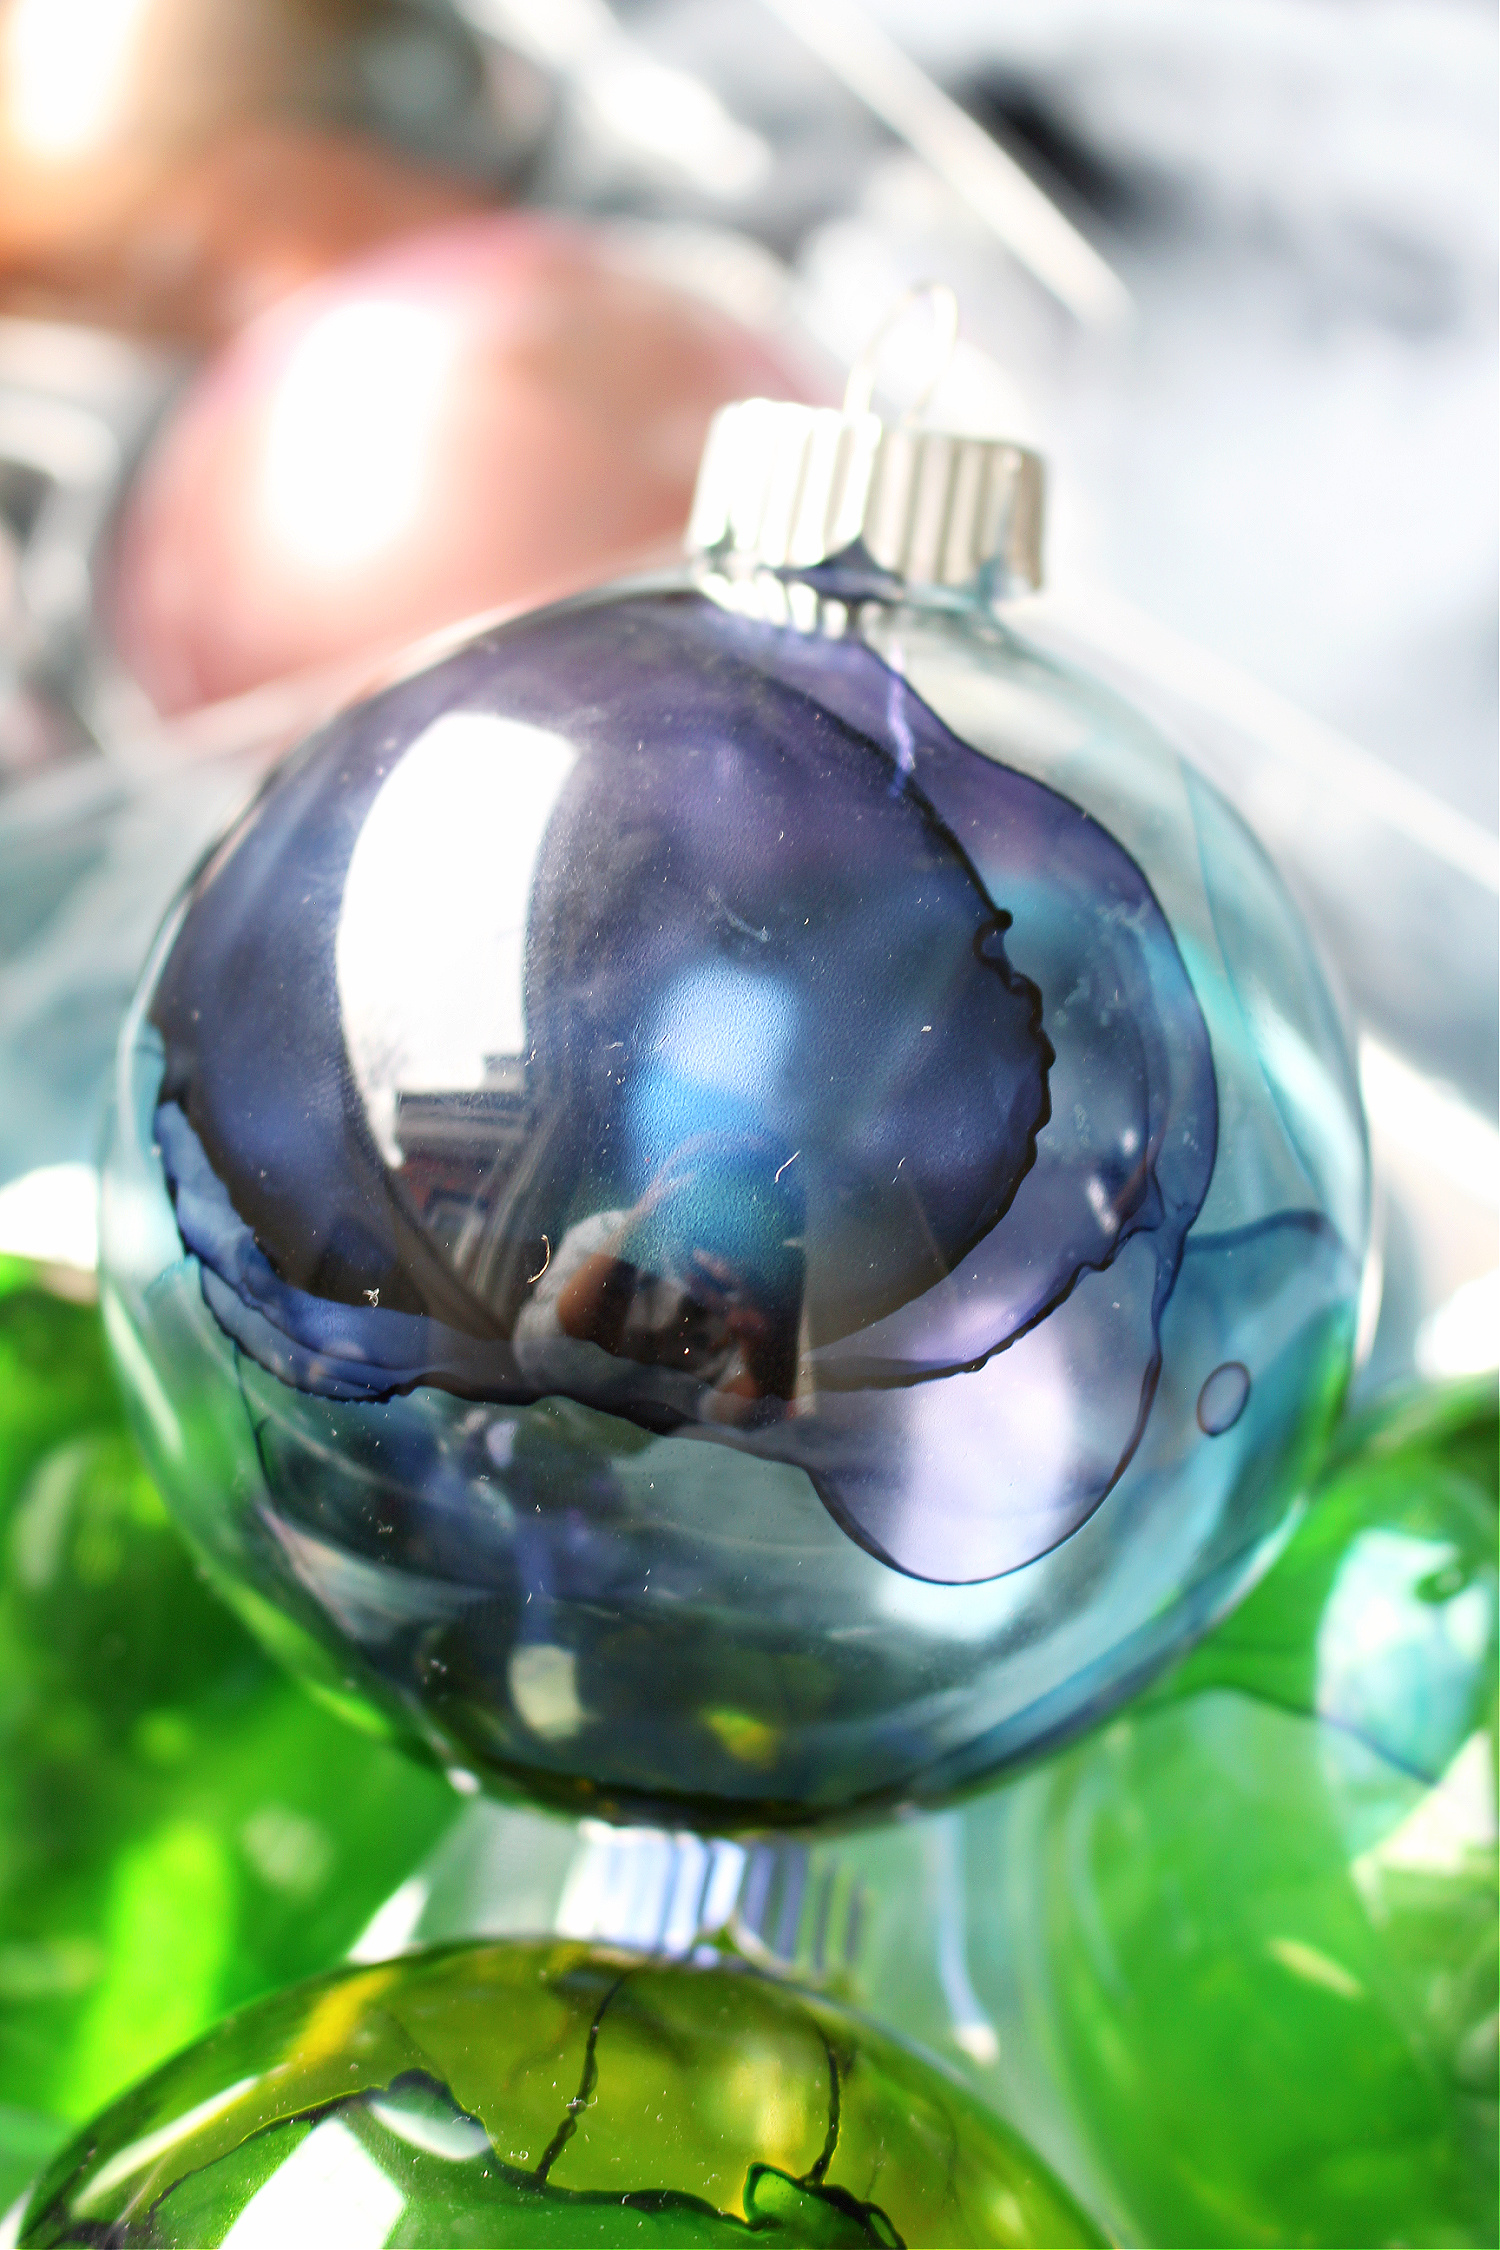 DIY Marbled Ornaments